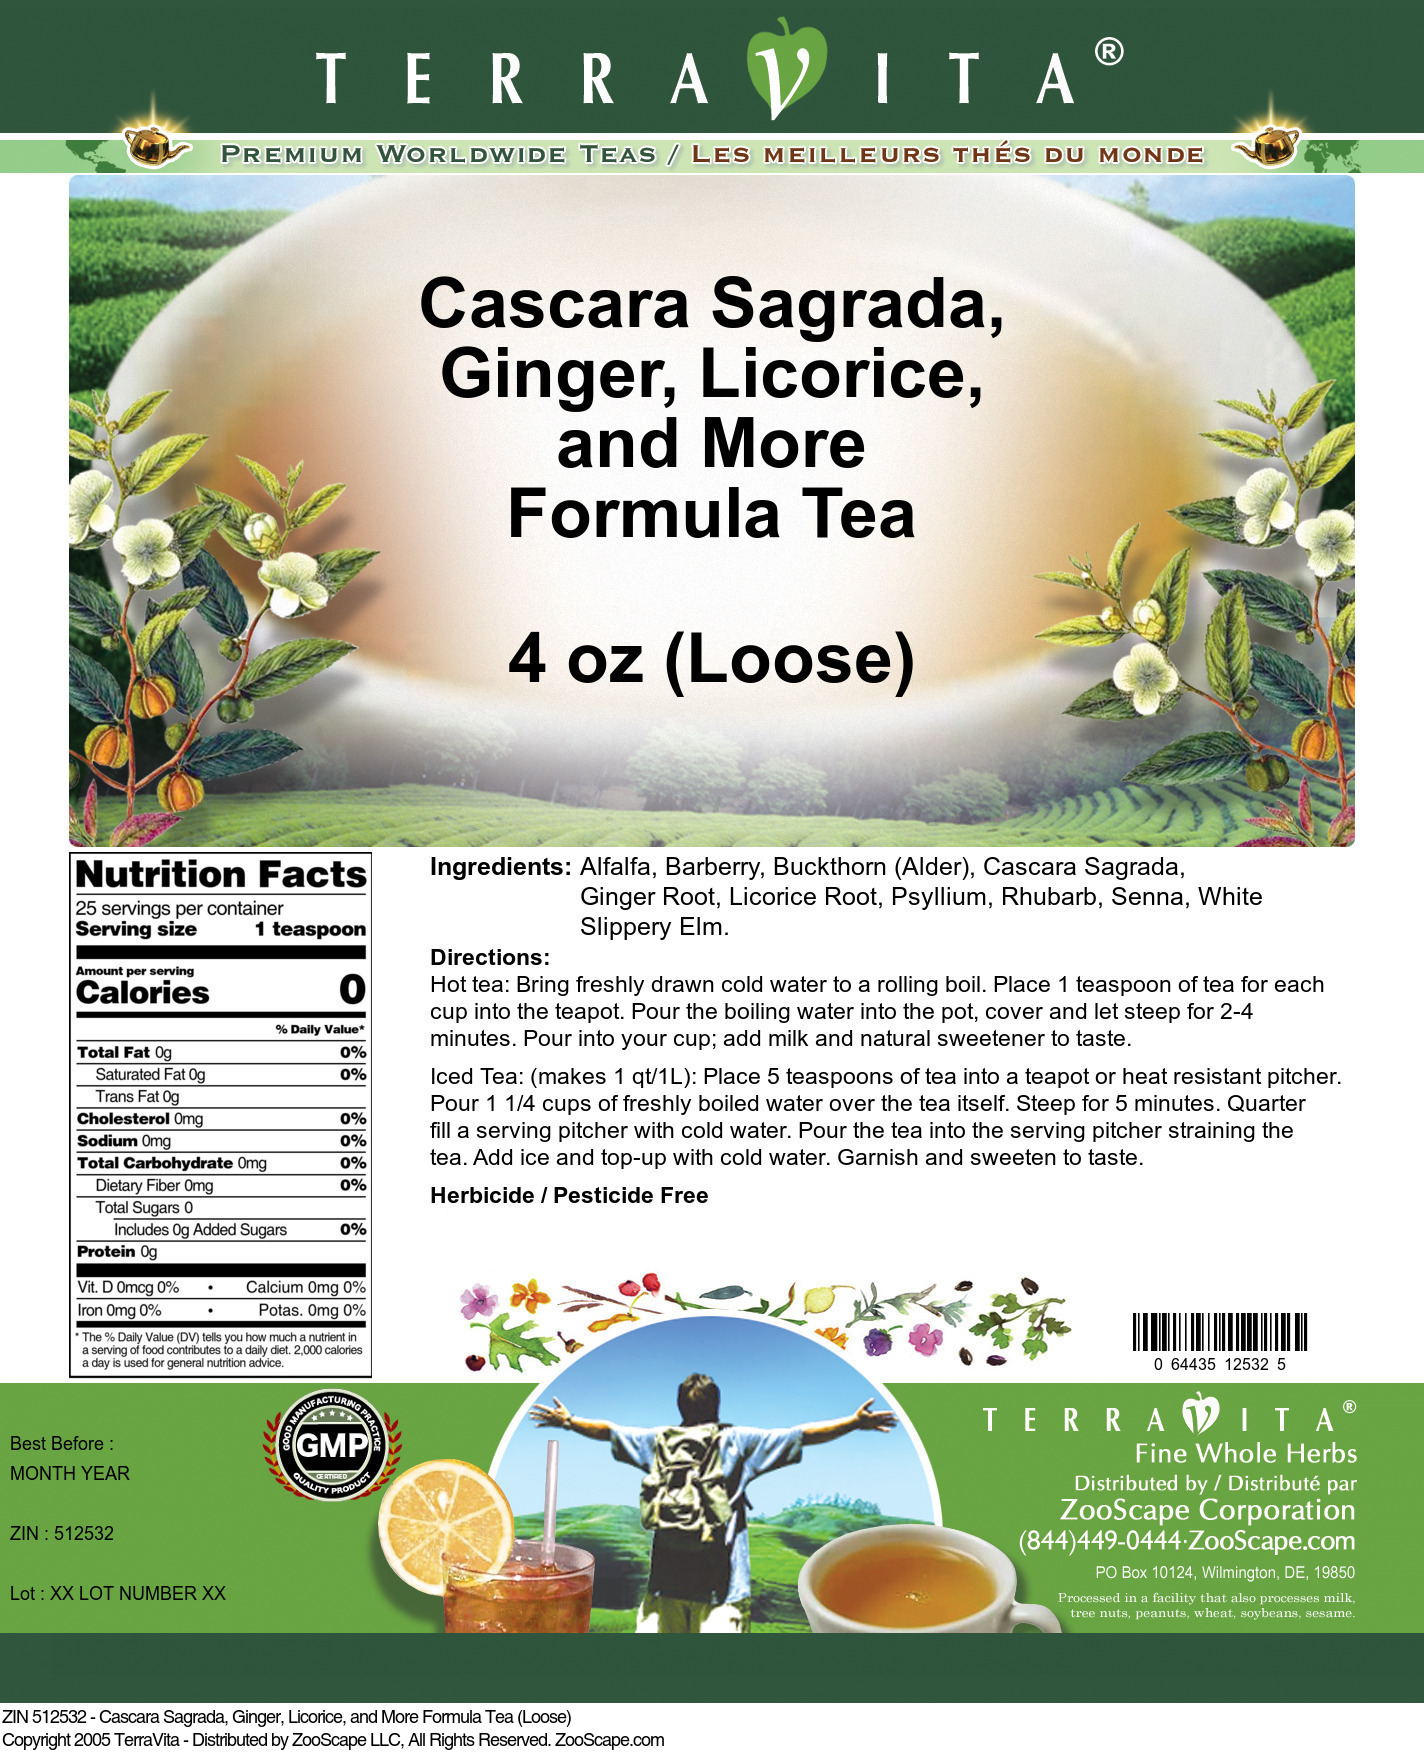 Cascara Sagrada, Ginger, Licorice, and More Formula Tea (Loose) - Label